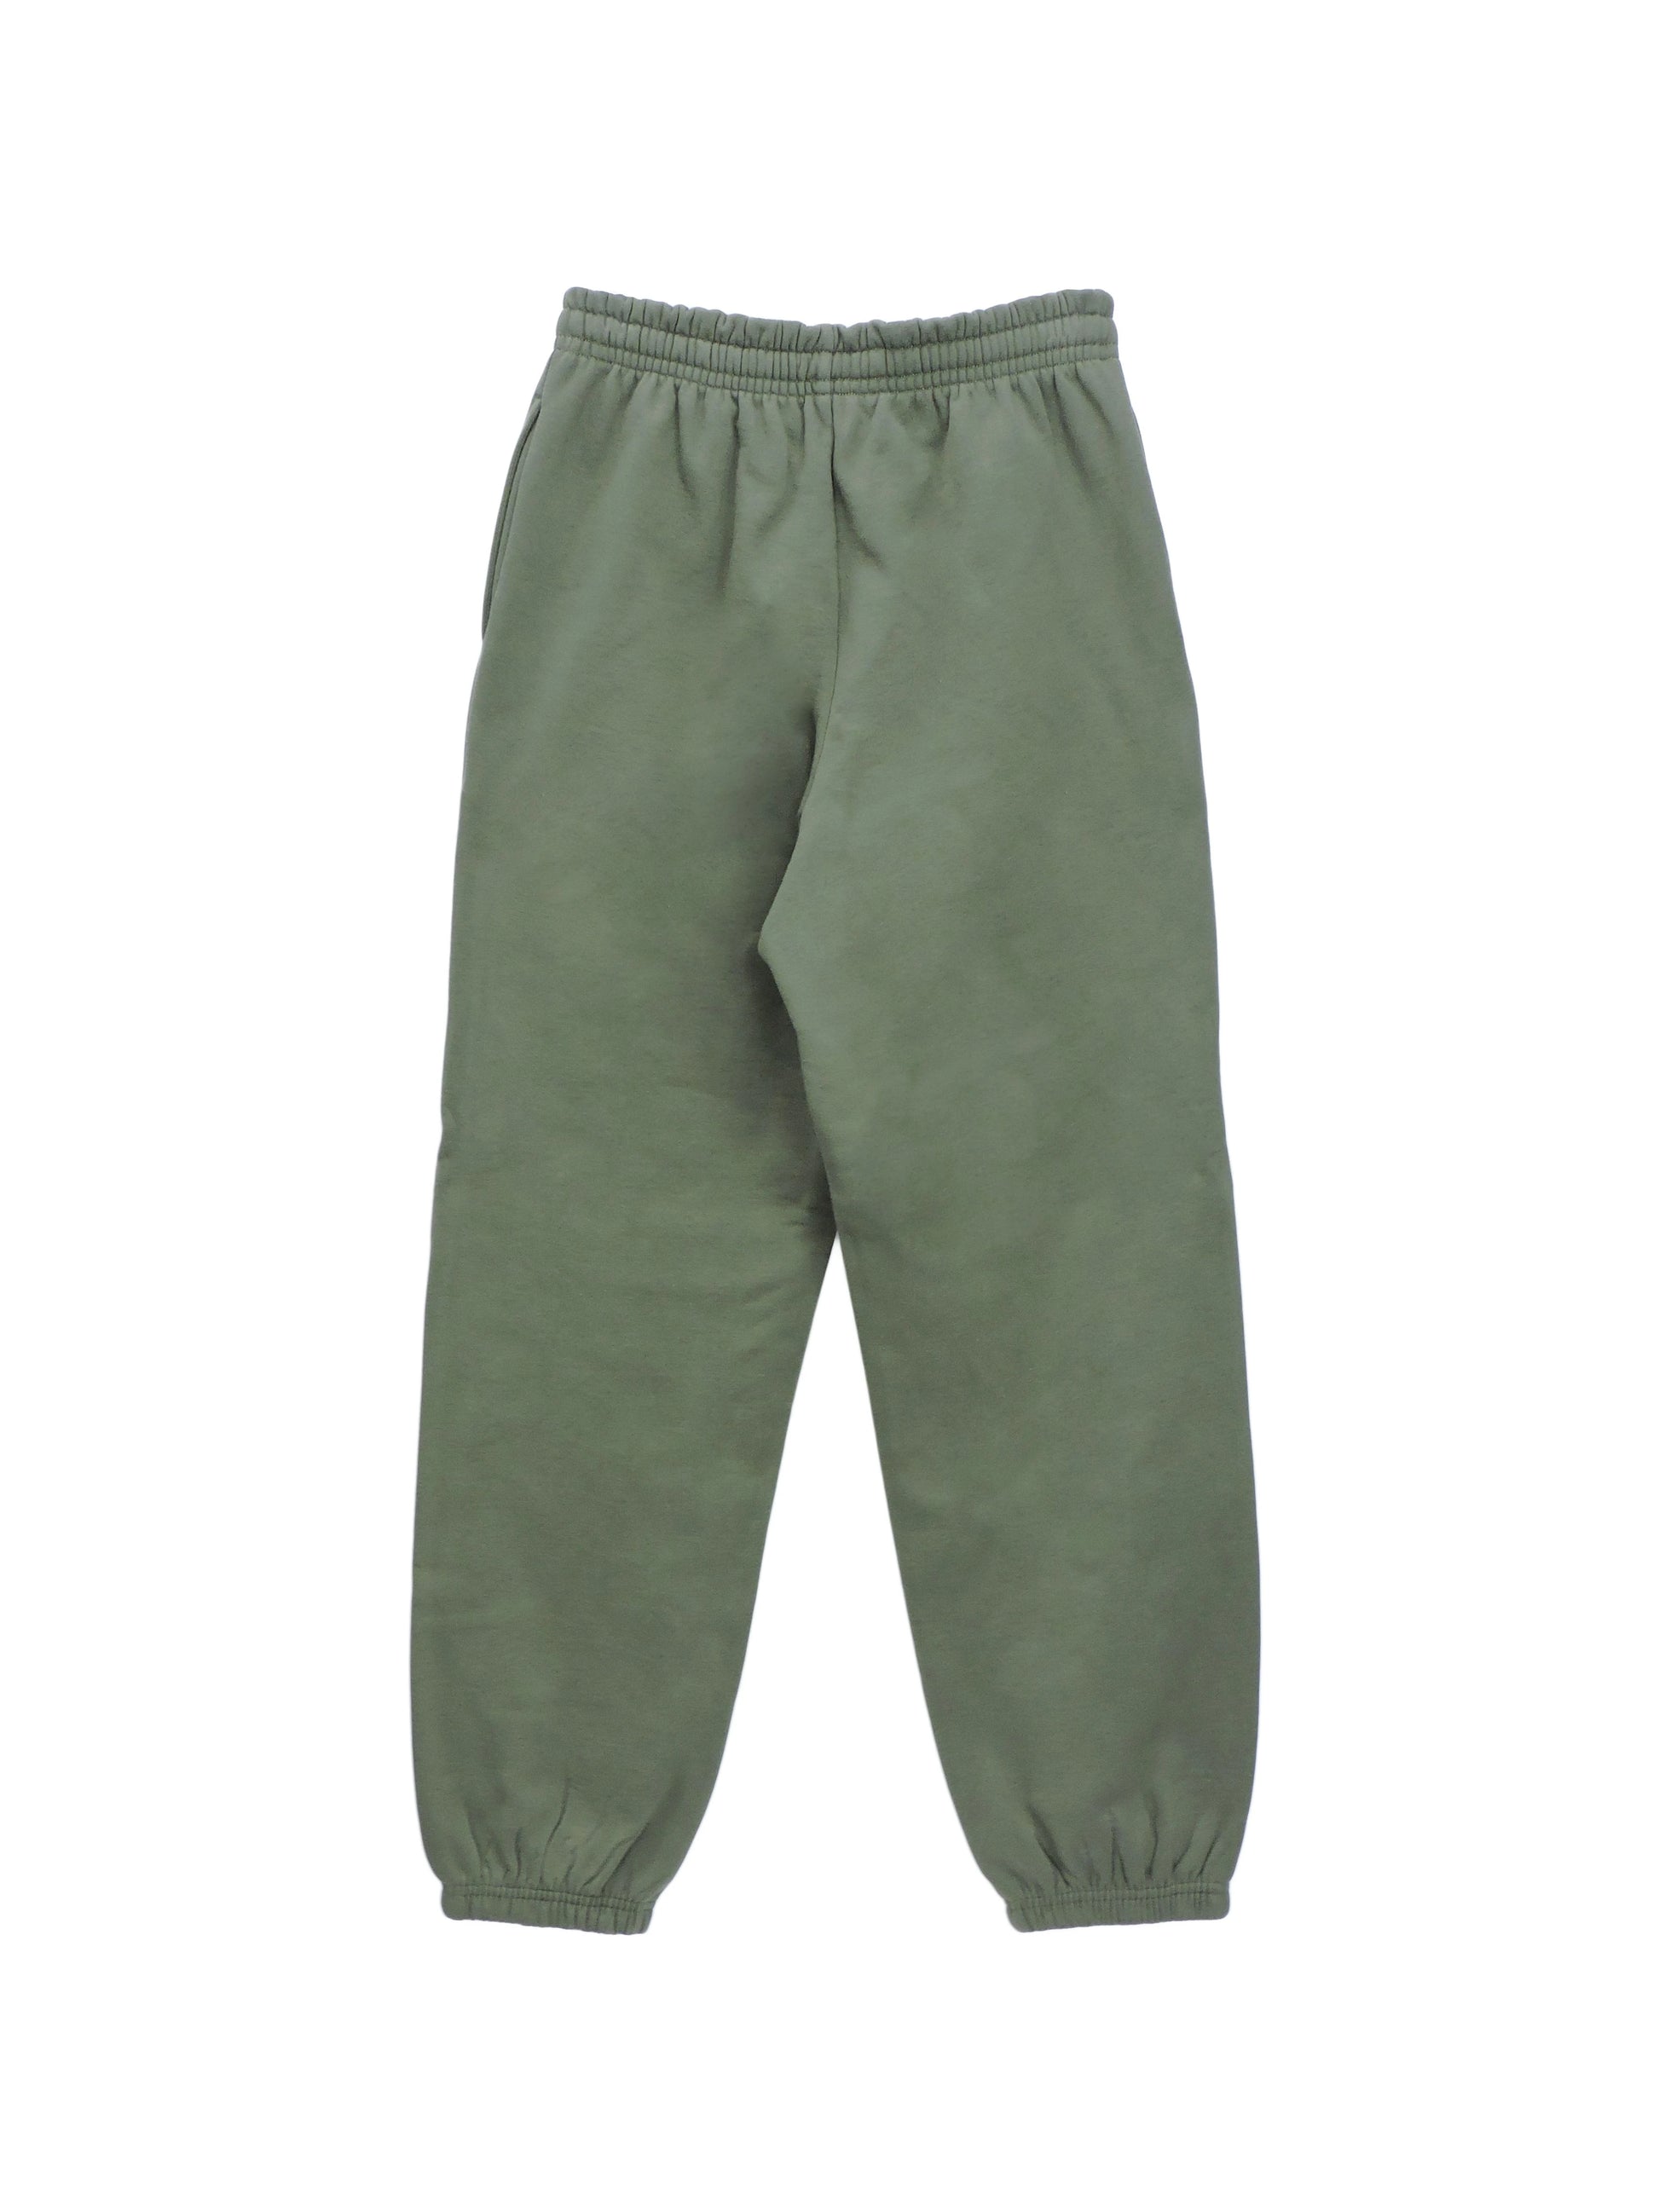 Park Sweatpants - Olive Green Heavy Fleece